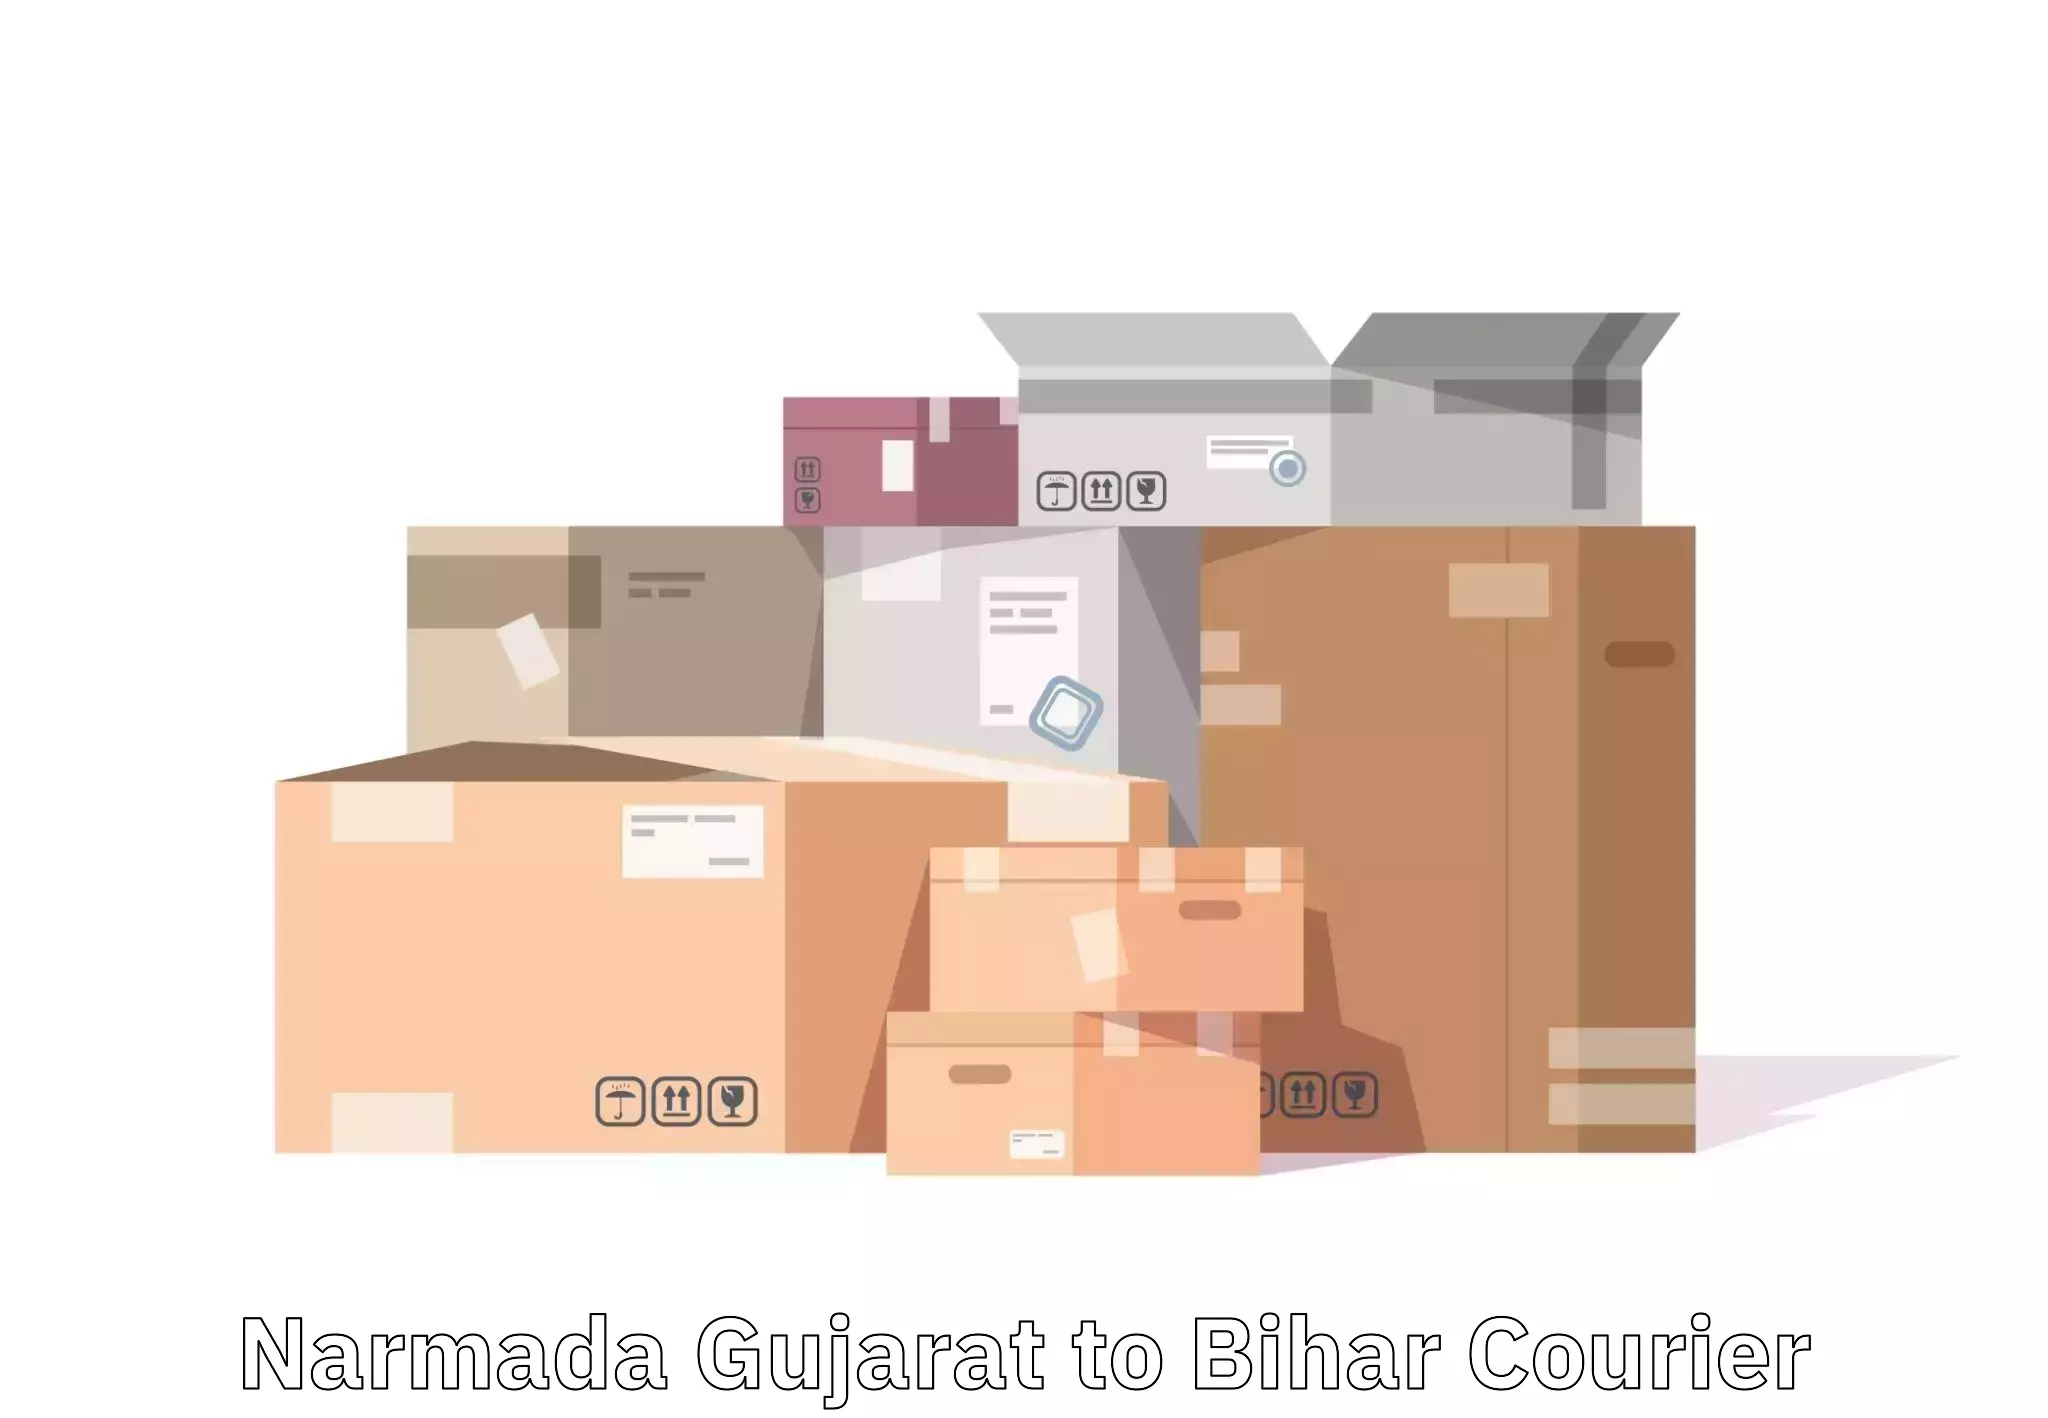 Baggage relocation service Narmada Gujarat to Fatwah